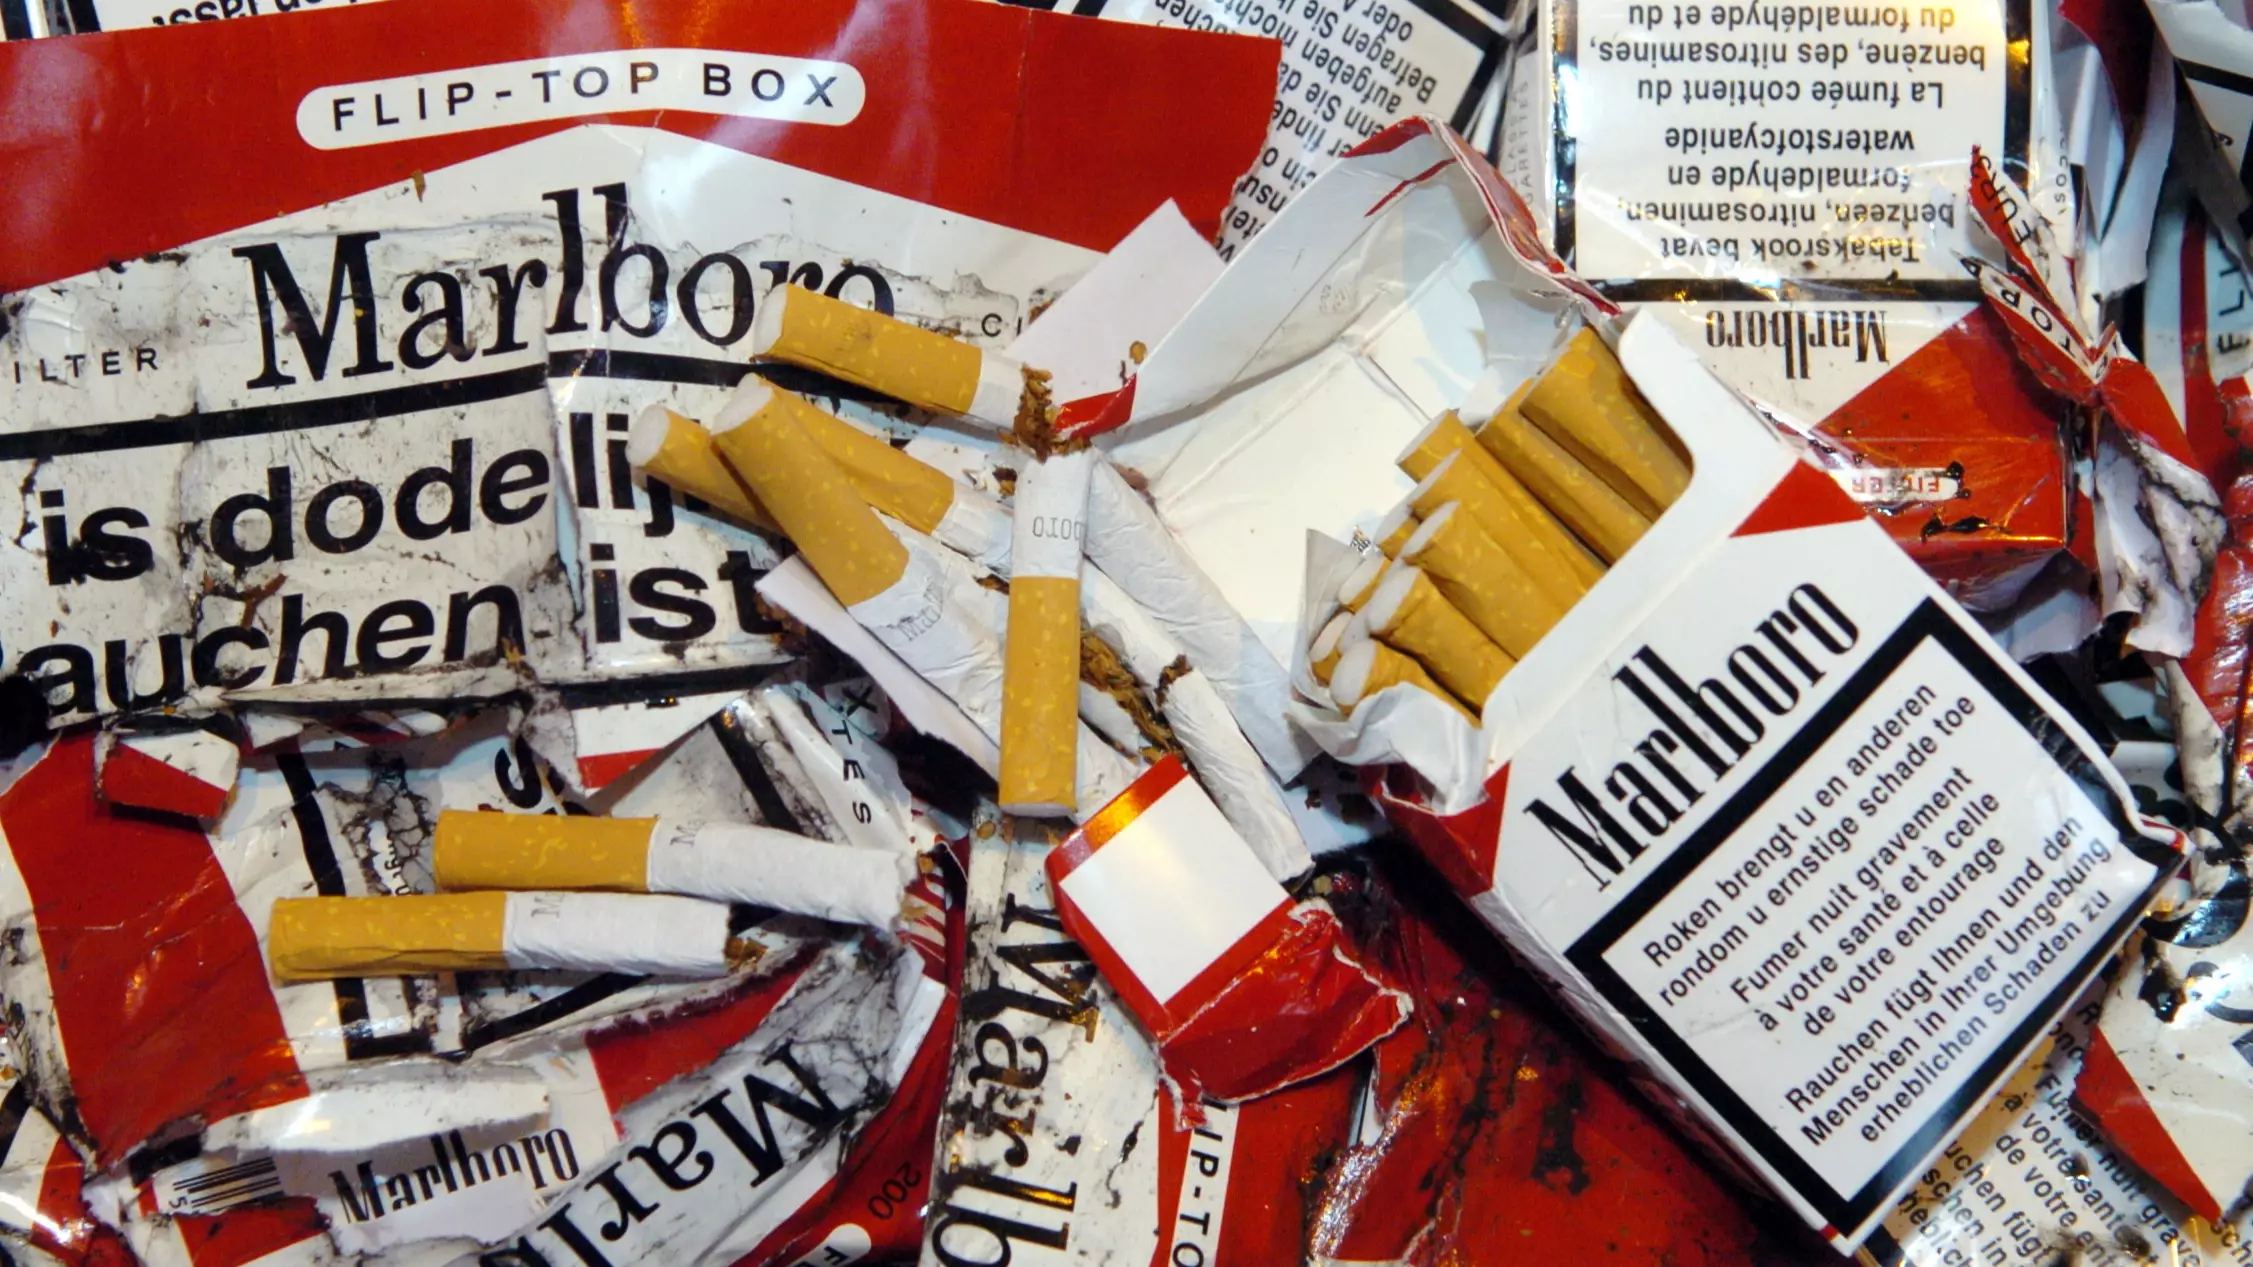 Philip Morris To Stop Selling Marlboro Cigarettes In UK In Next Decade